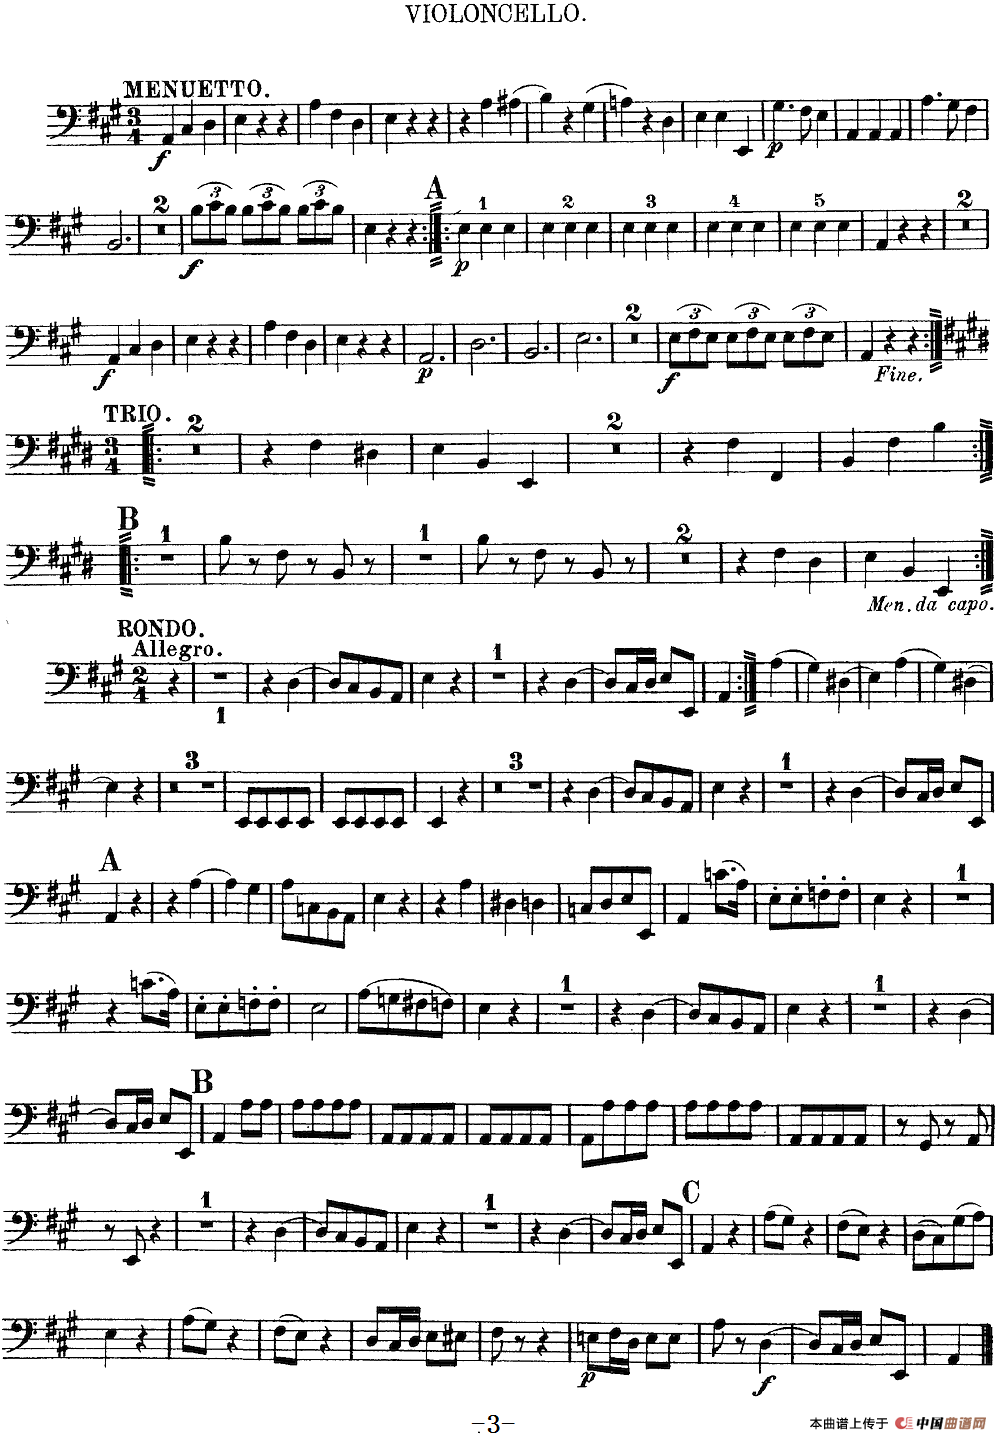 Mozart《Quartet No.9 in A Major,K.169》（Cello分谱）